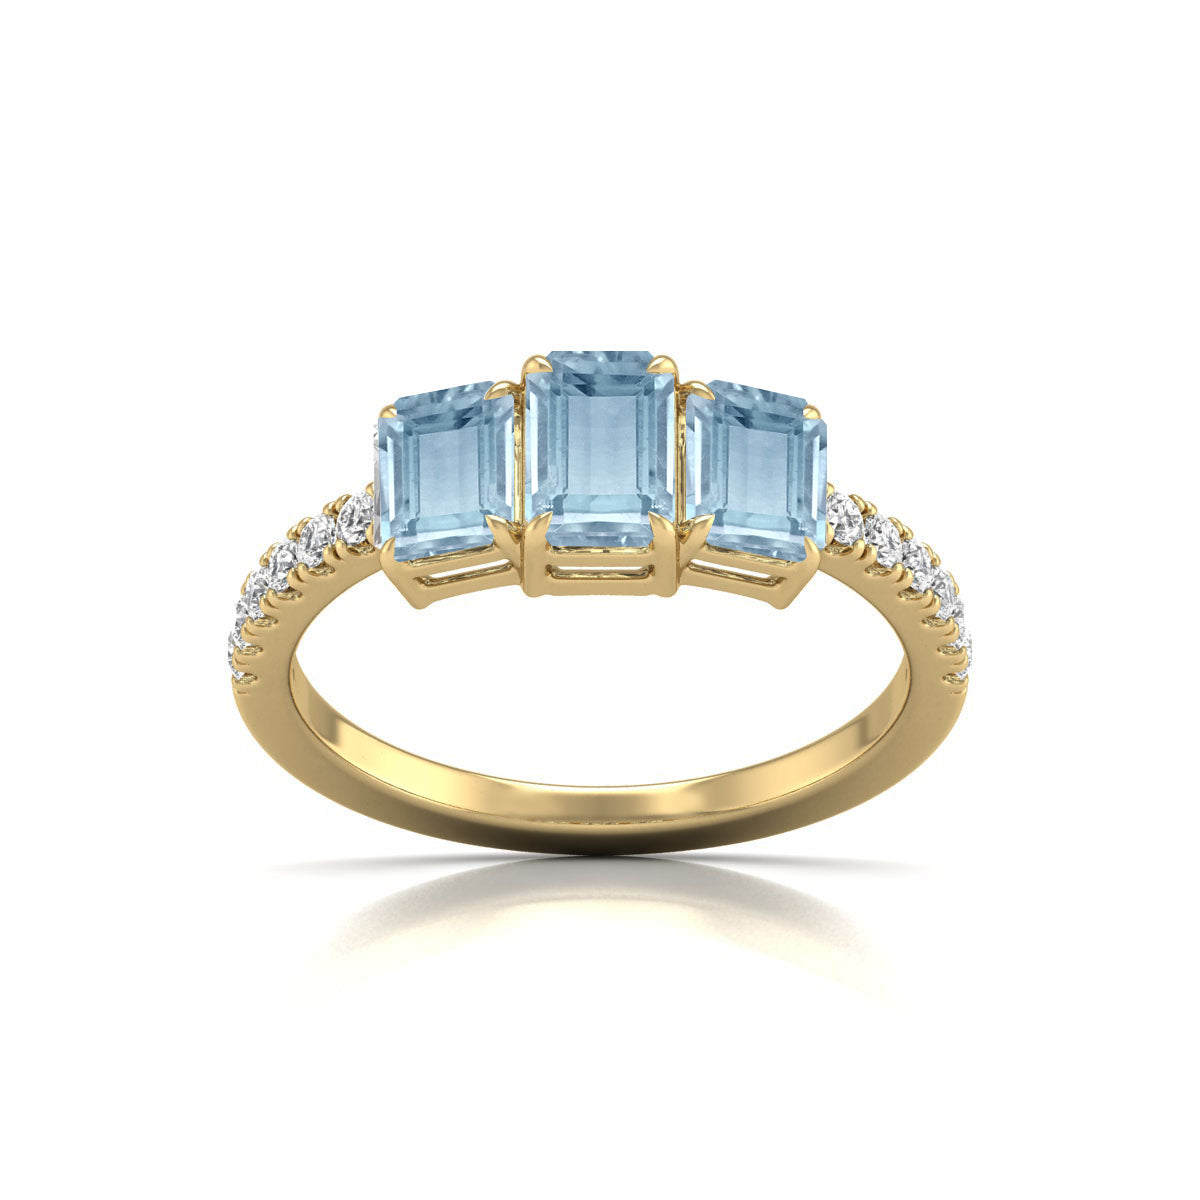 Natural Round Diamond and Emerald Cut Aquamarine Gemstone Ring in 14K White and Yellow Gold